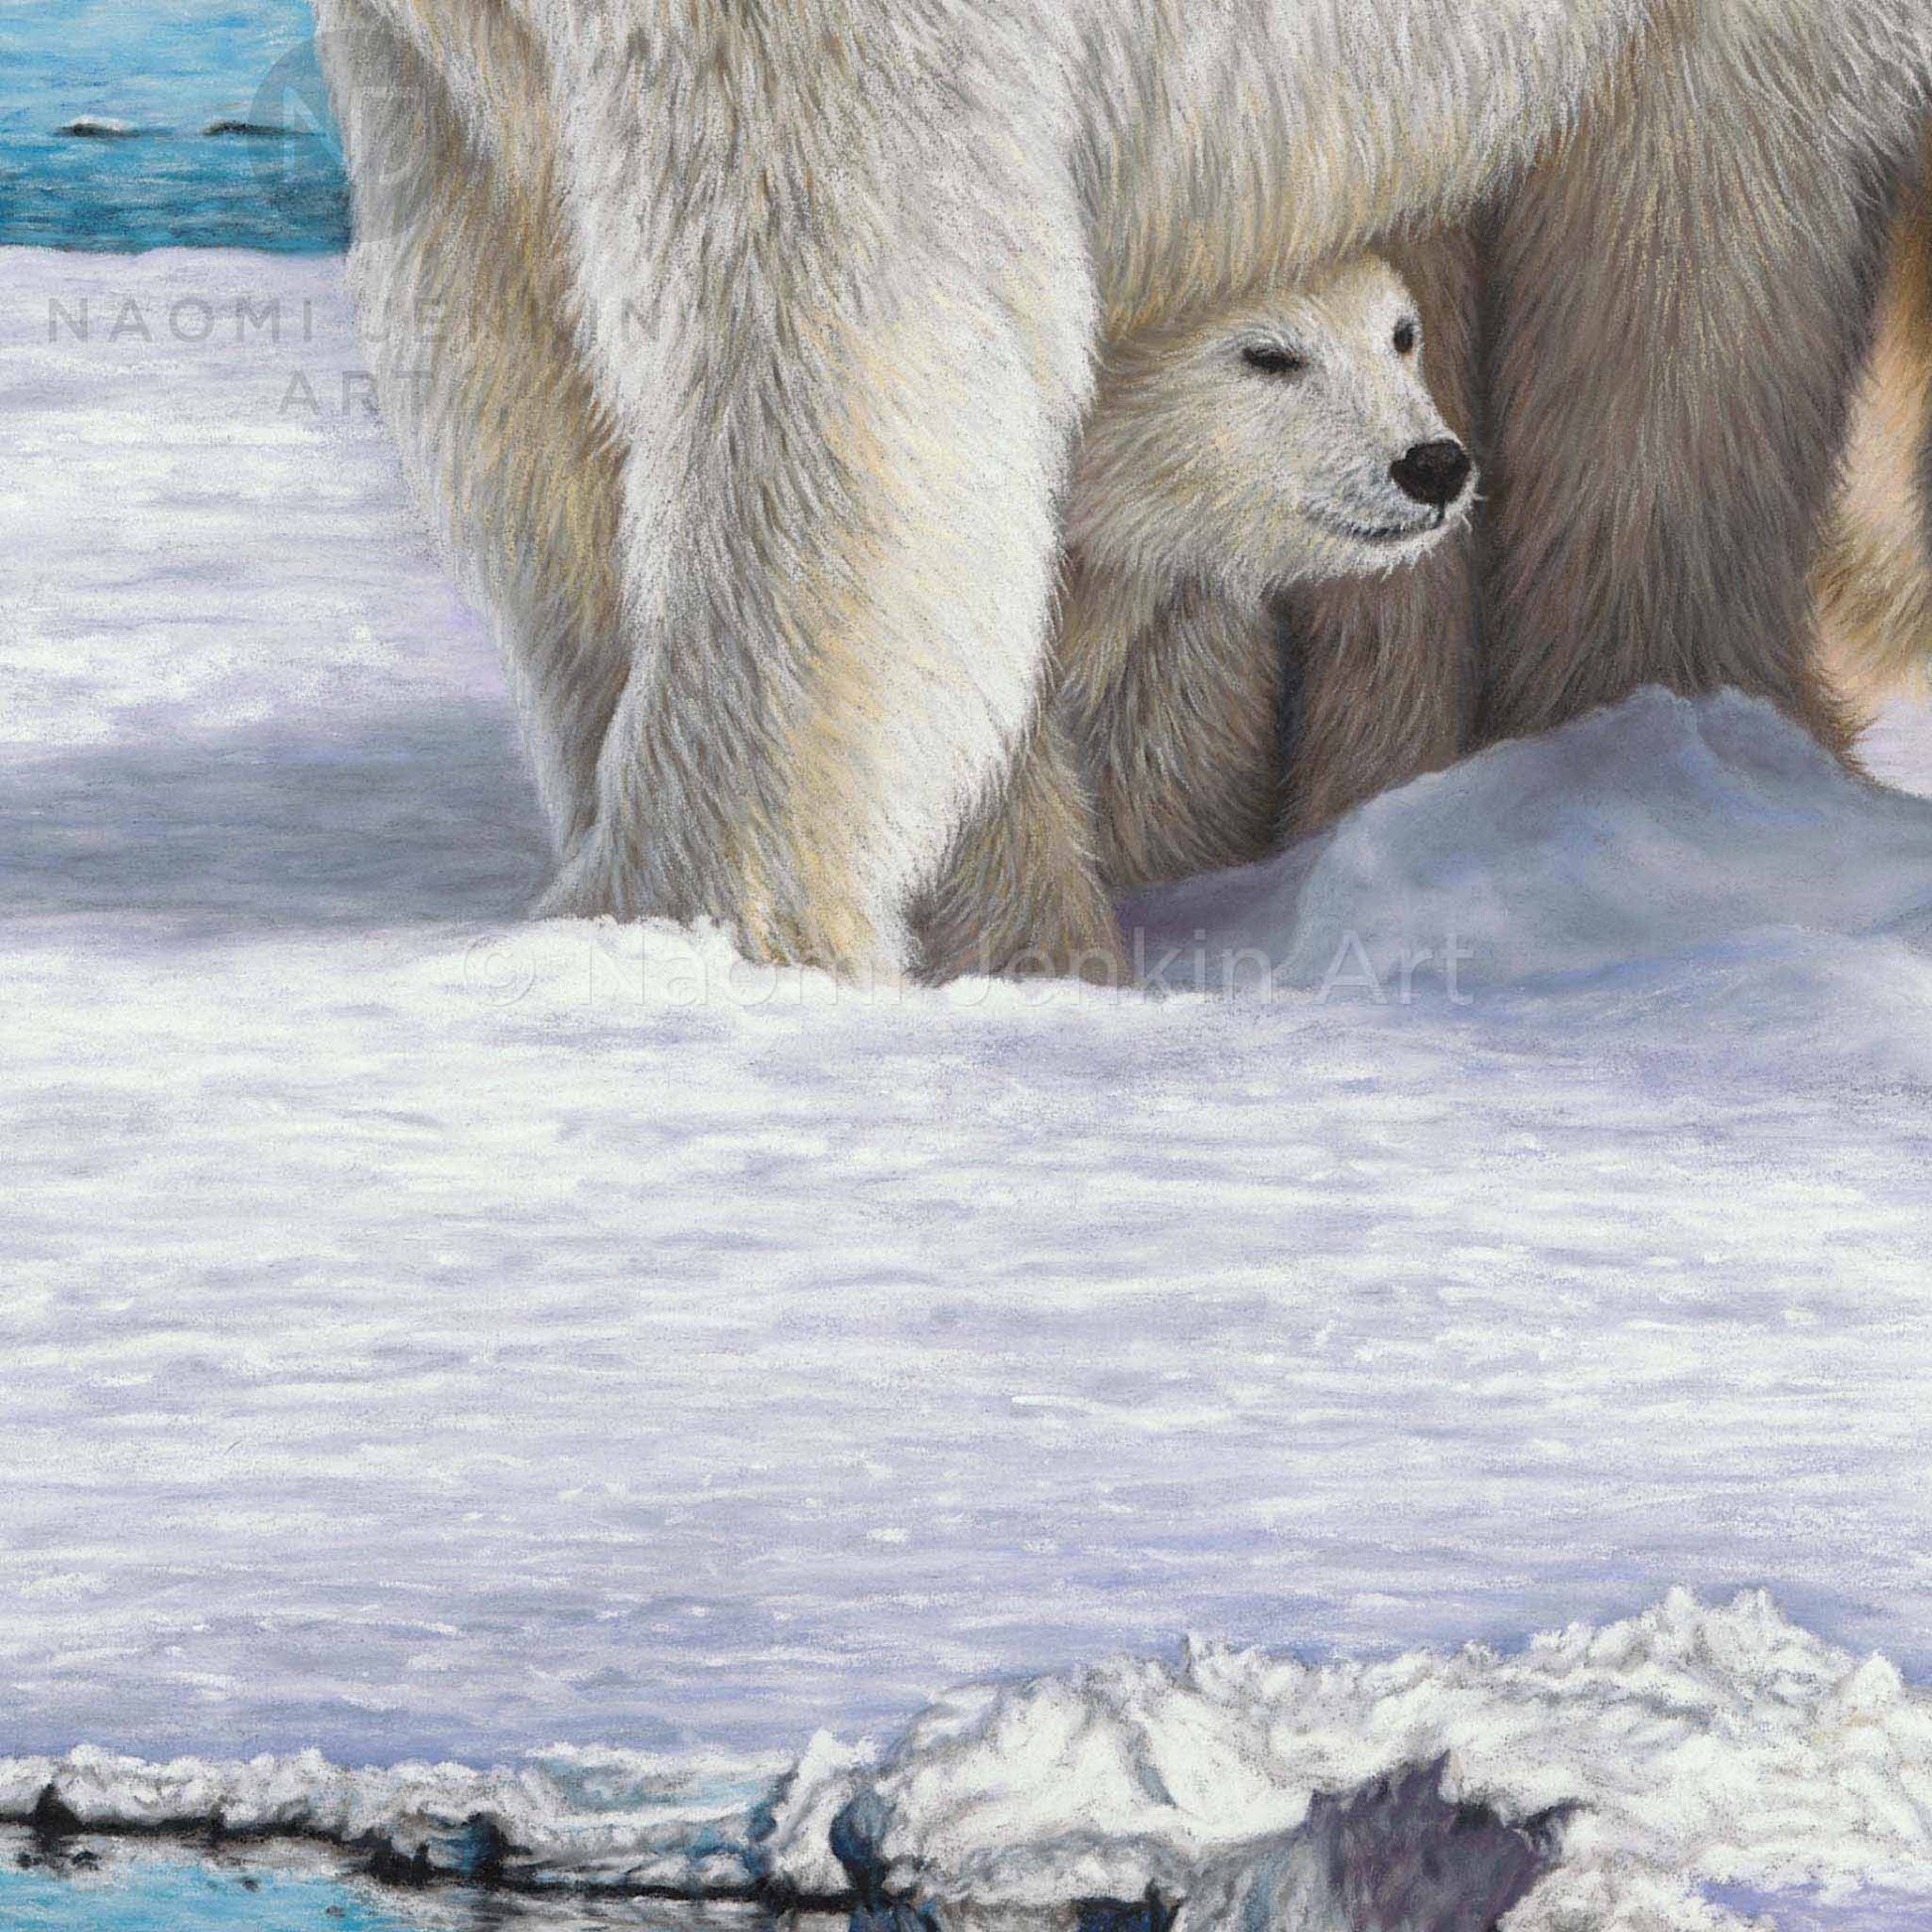 Polar bear cub artwork from the original 'On Thin Ice' wildlife painting by Naomi Jenkin